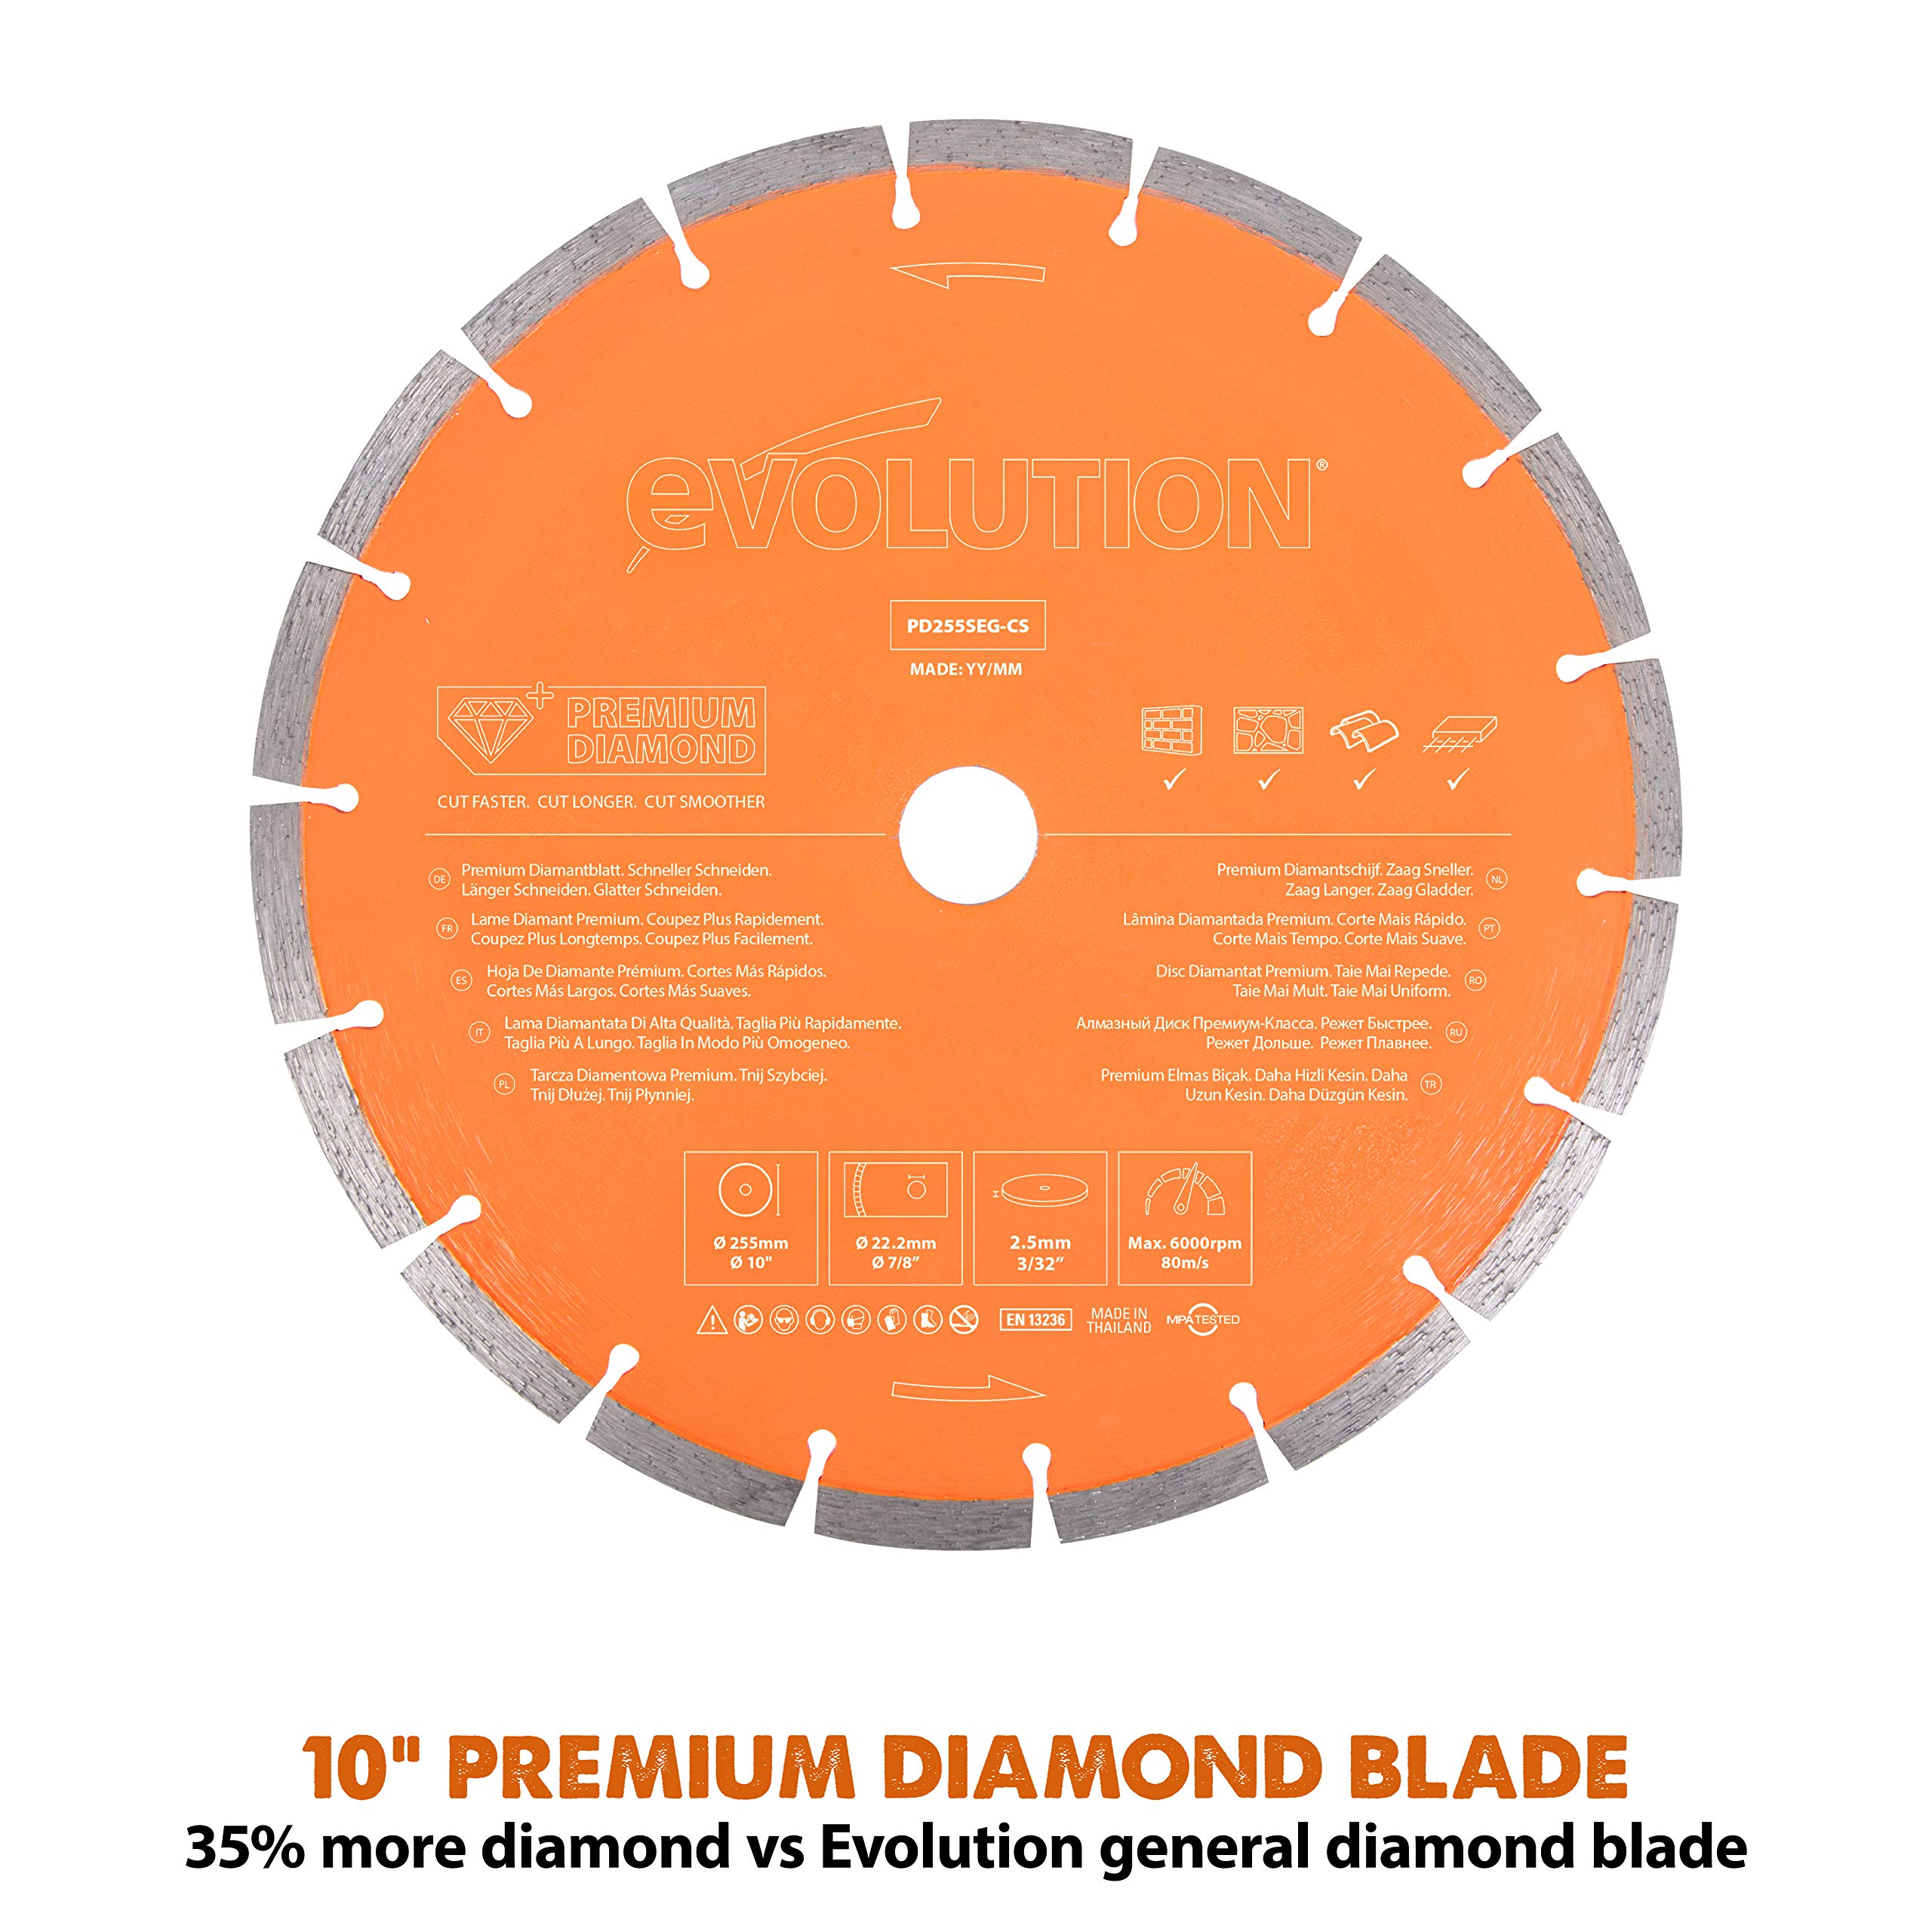 Evolution R255DCT - 10 In Concrete Saw (Aka Circular Saw, Angle Grinder, Chop Saw, Cut Off Saw, Demo Saw, Disc Cutter, Power Cutter) - 15A Motor, No Gas - 4-1/16 In Cut - Incl Premium Diamond Blade